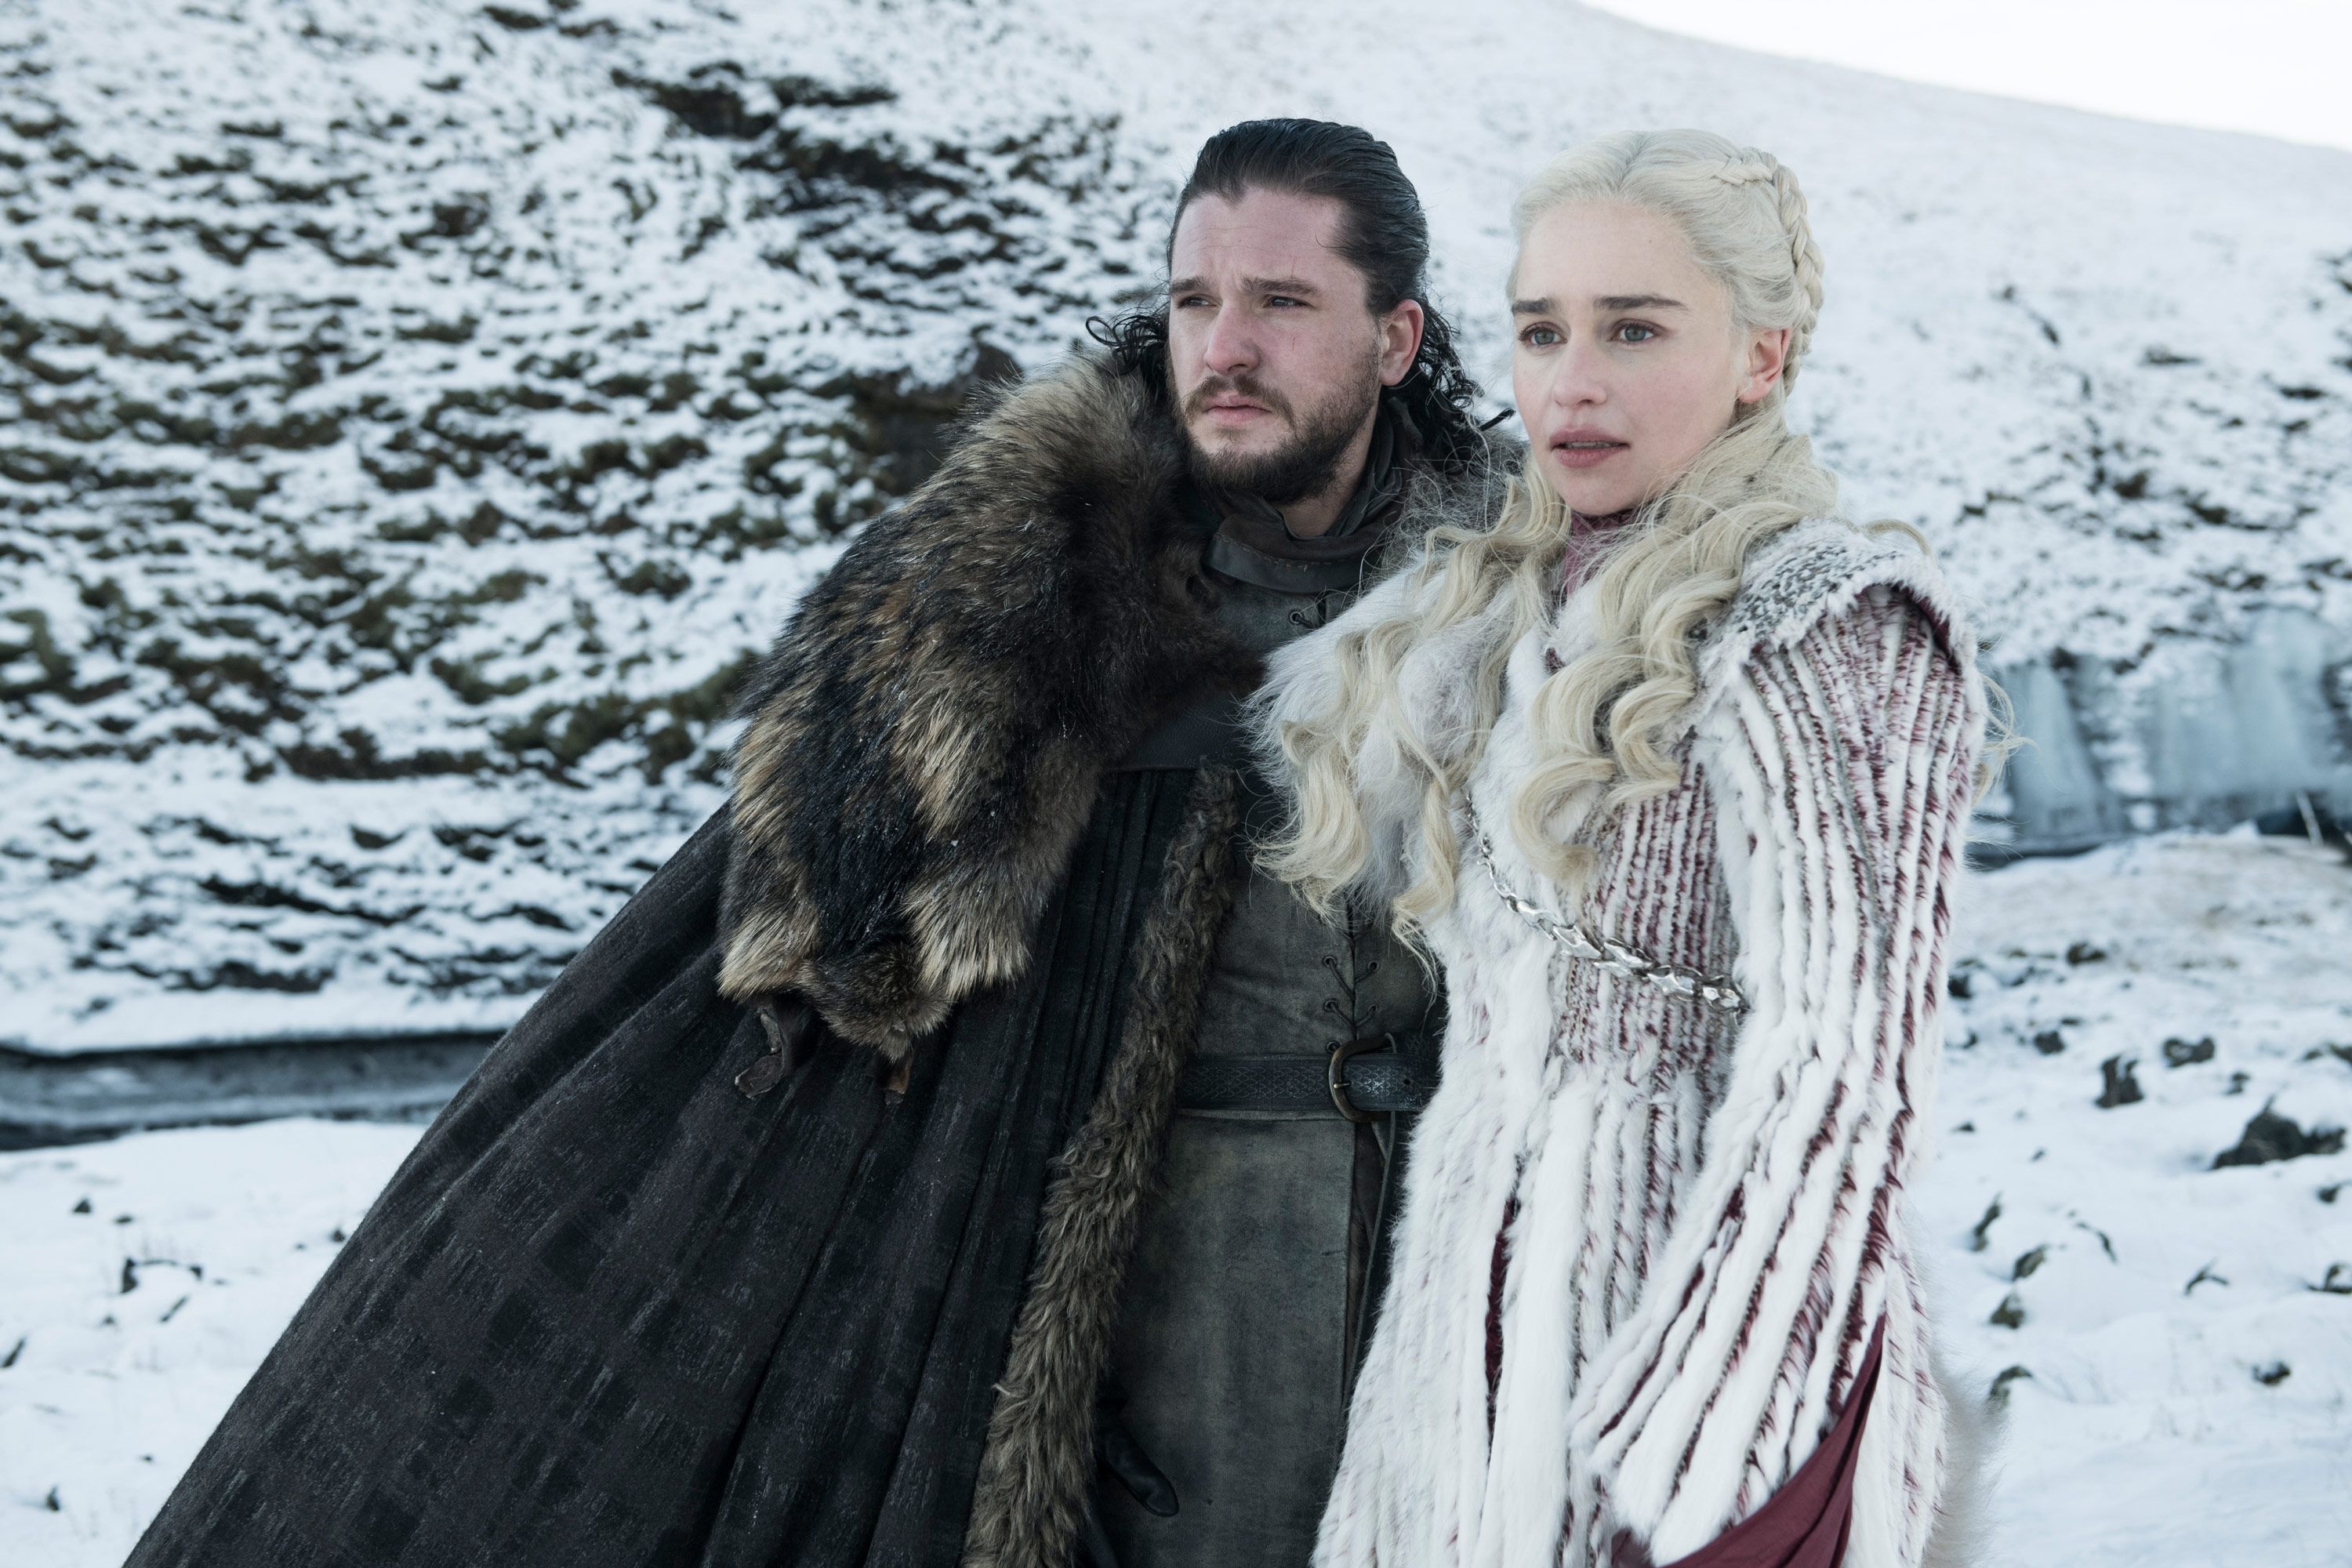 Emilia Clarke in Game of Thrones alongside Jon Snow.